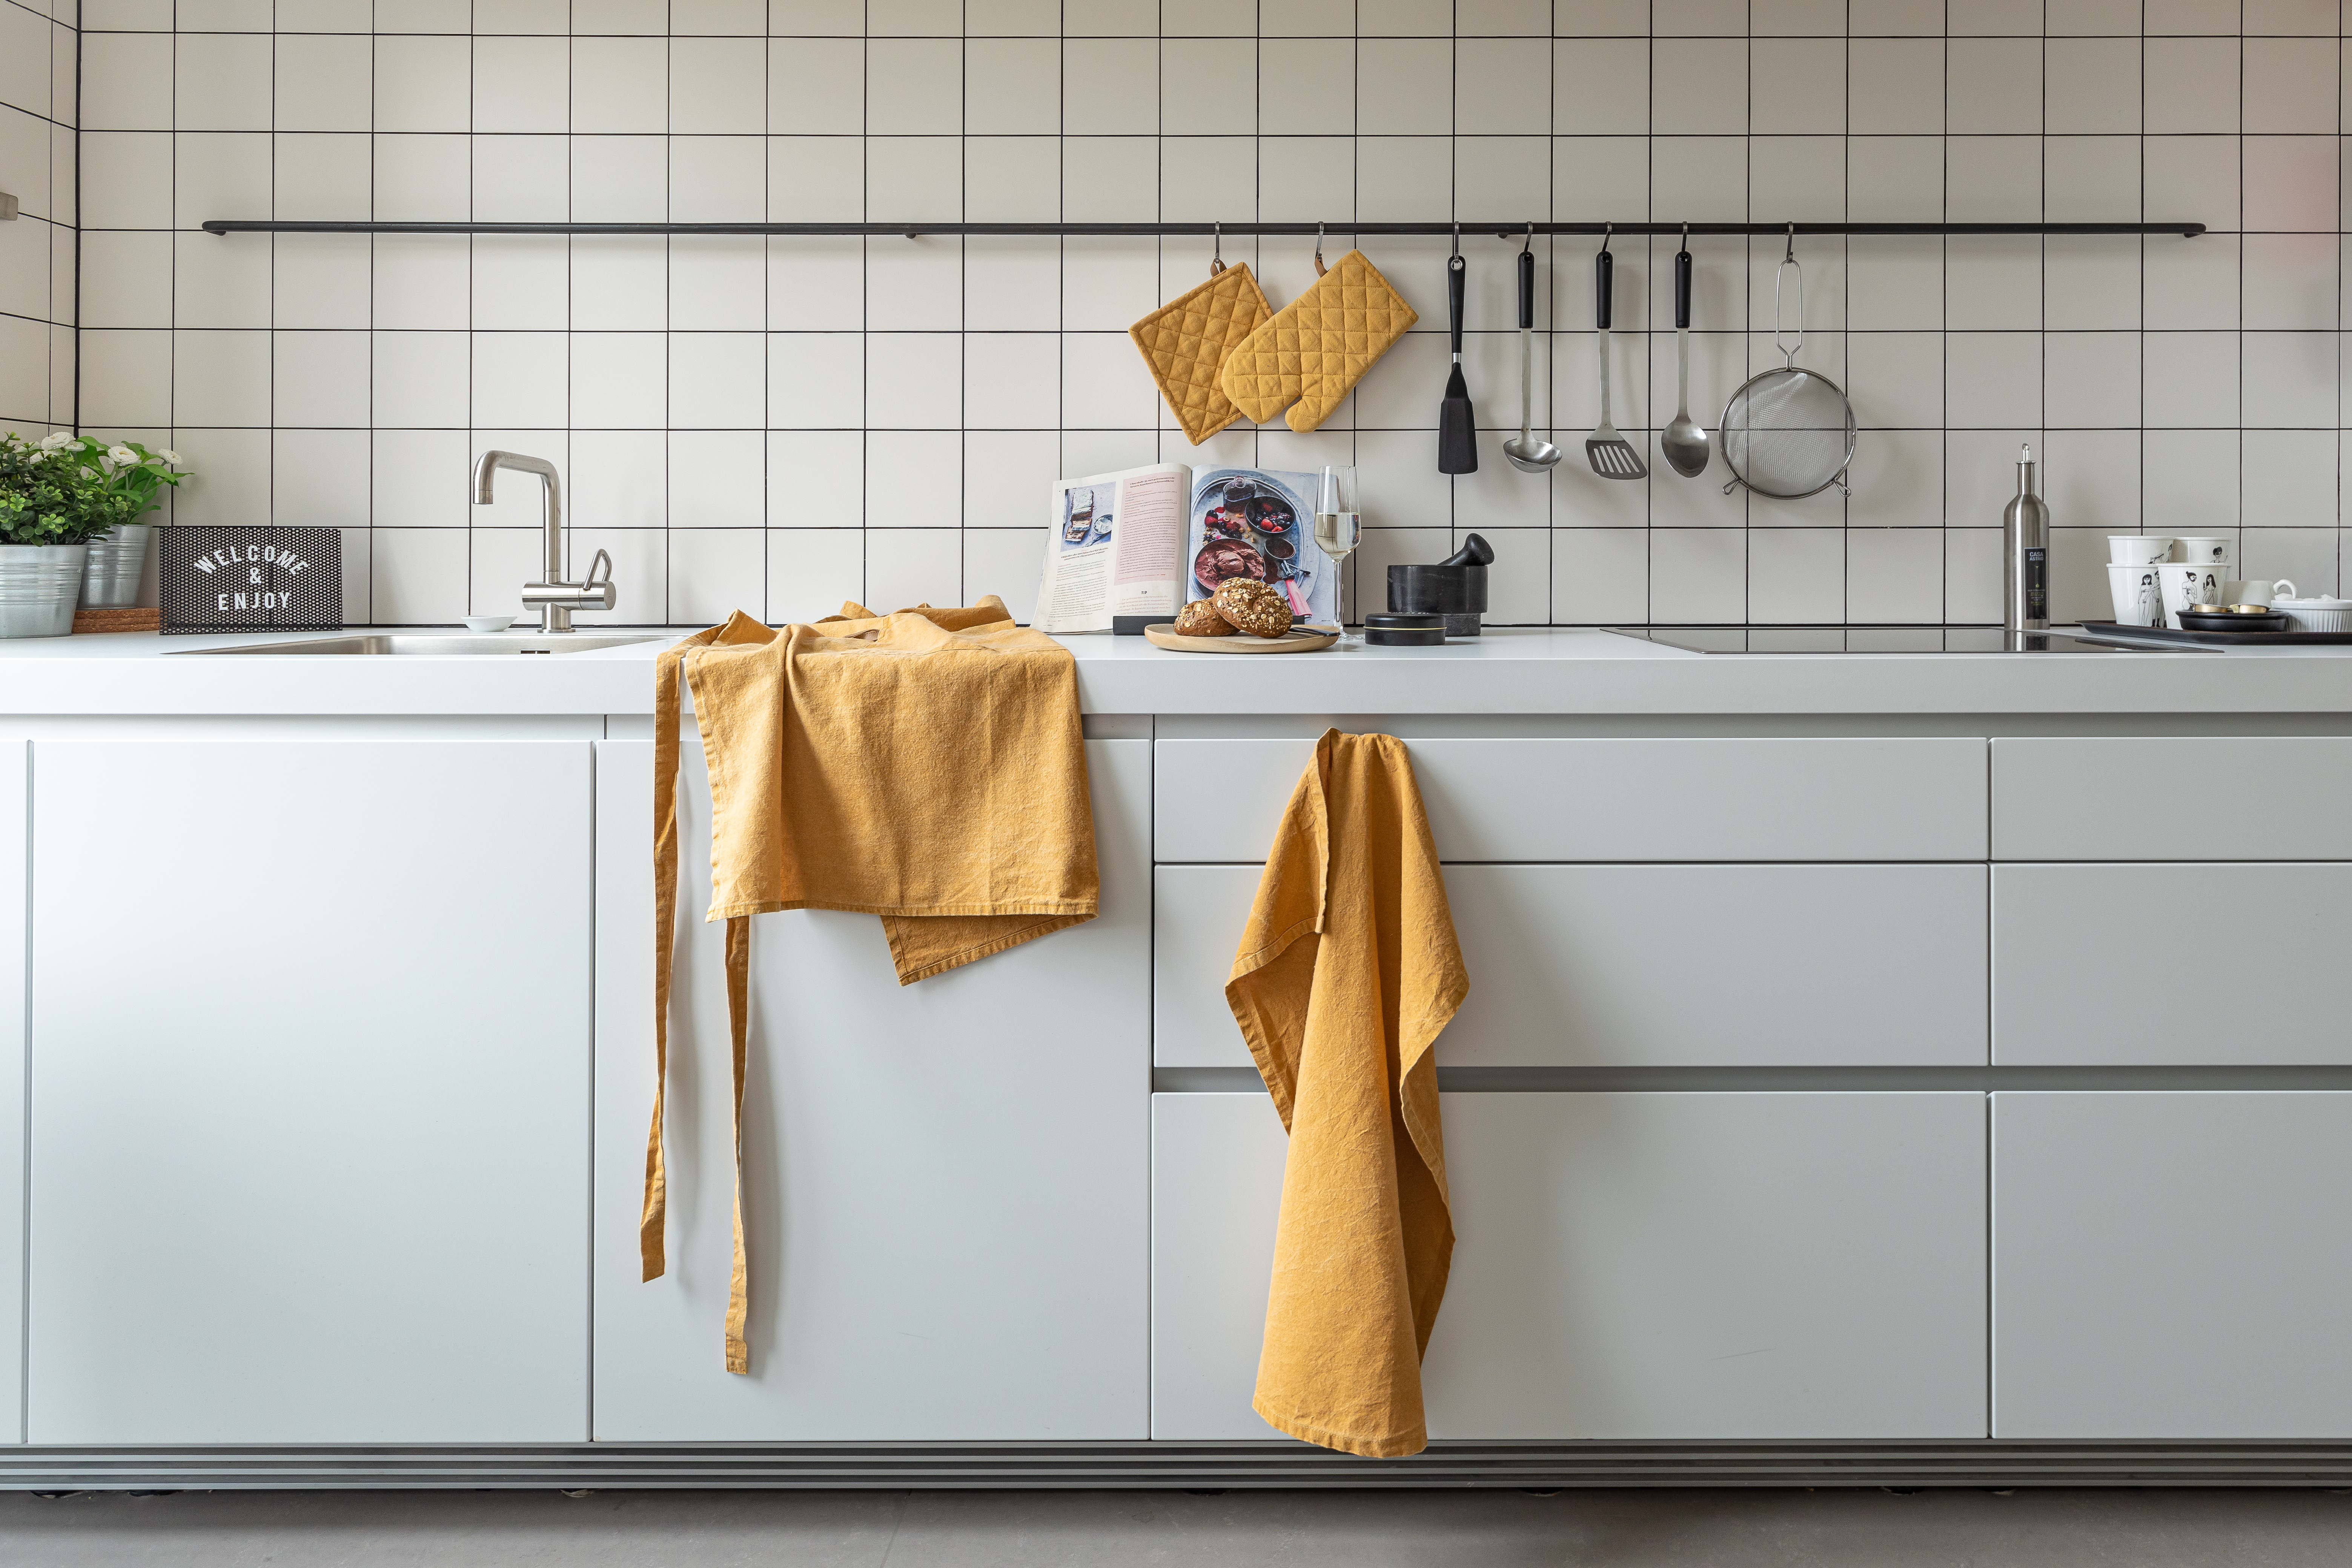 Kitchen apron, pot holder, oven mitt and kitchen towel in kitchen.